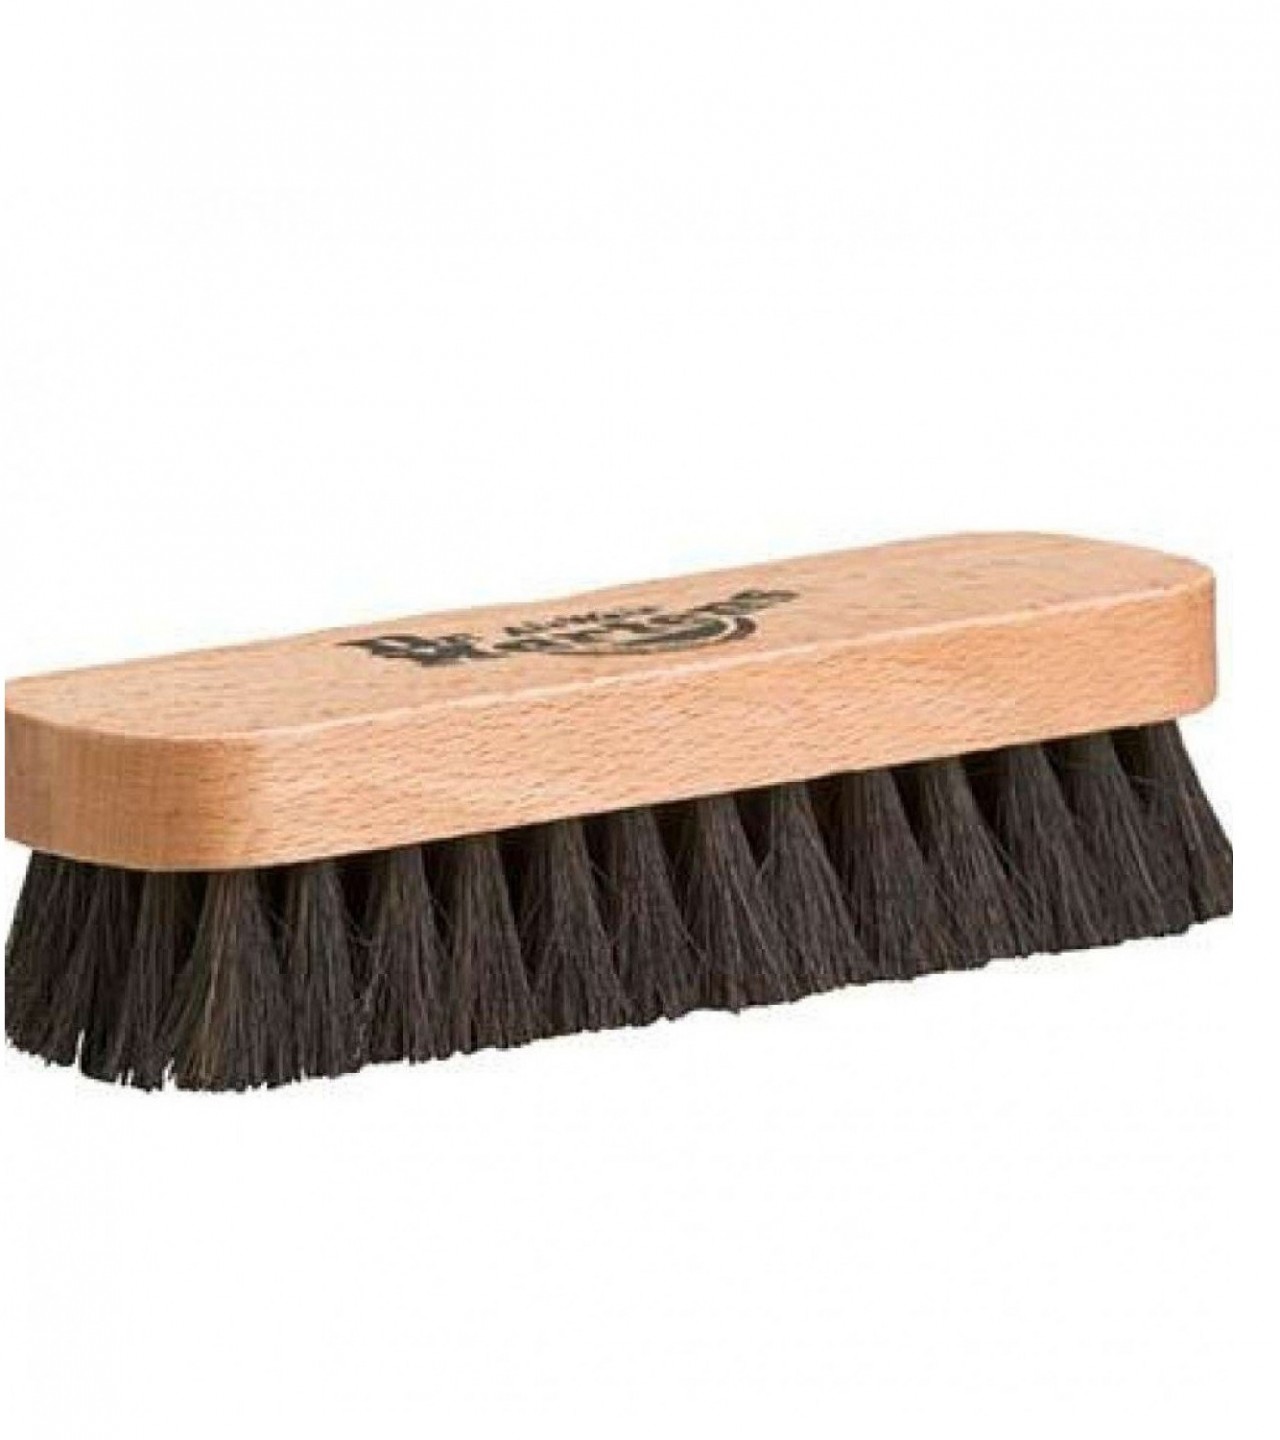 Shoe Cleaning Brush Black - Horse hair bristles